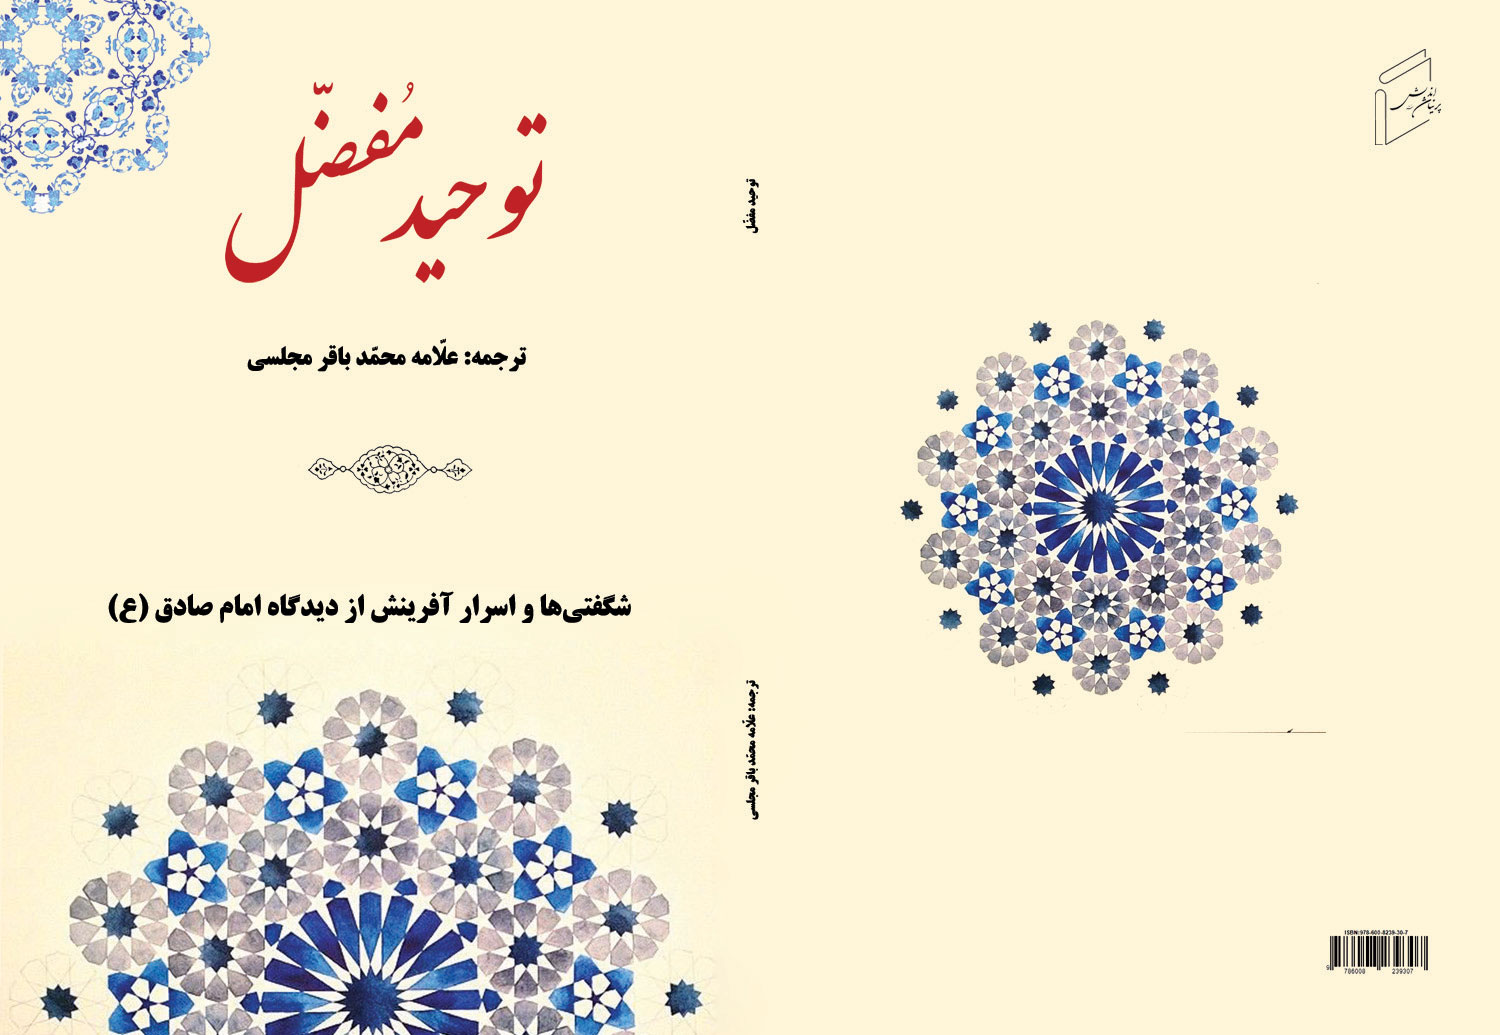 Tawhid al-Mufaddal has been published.